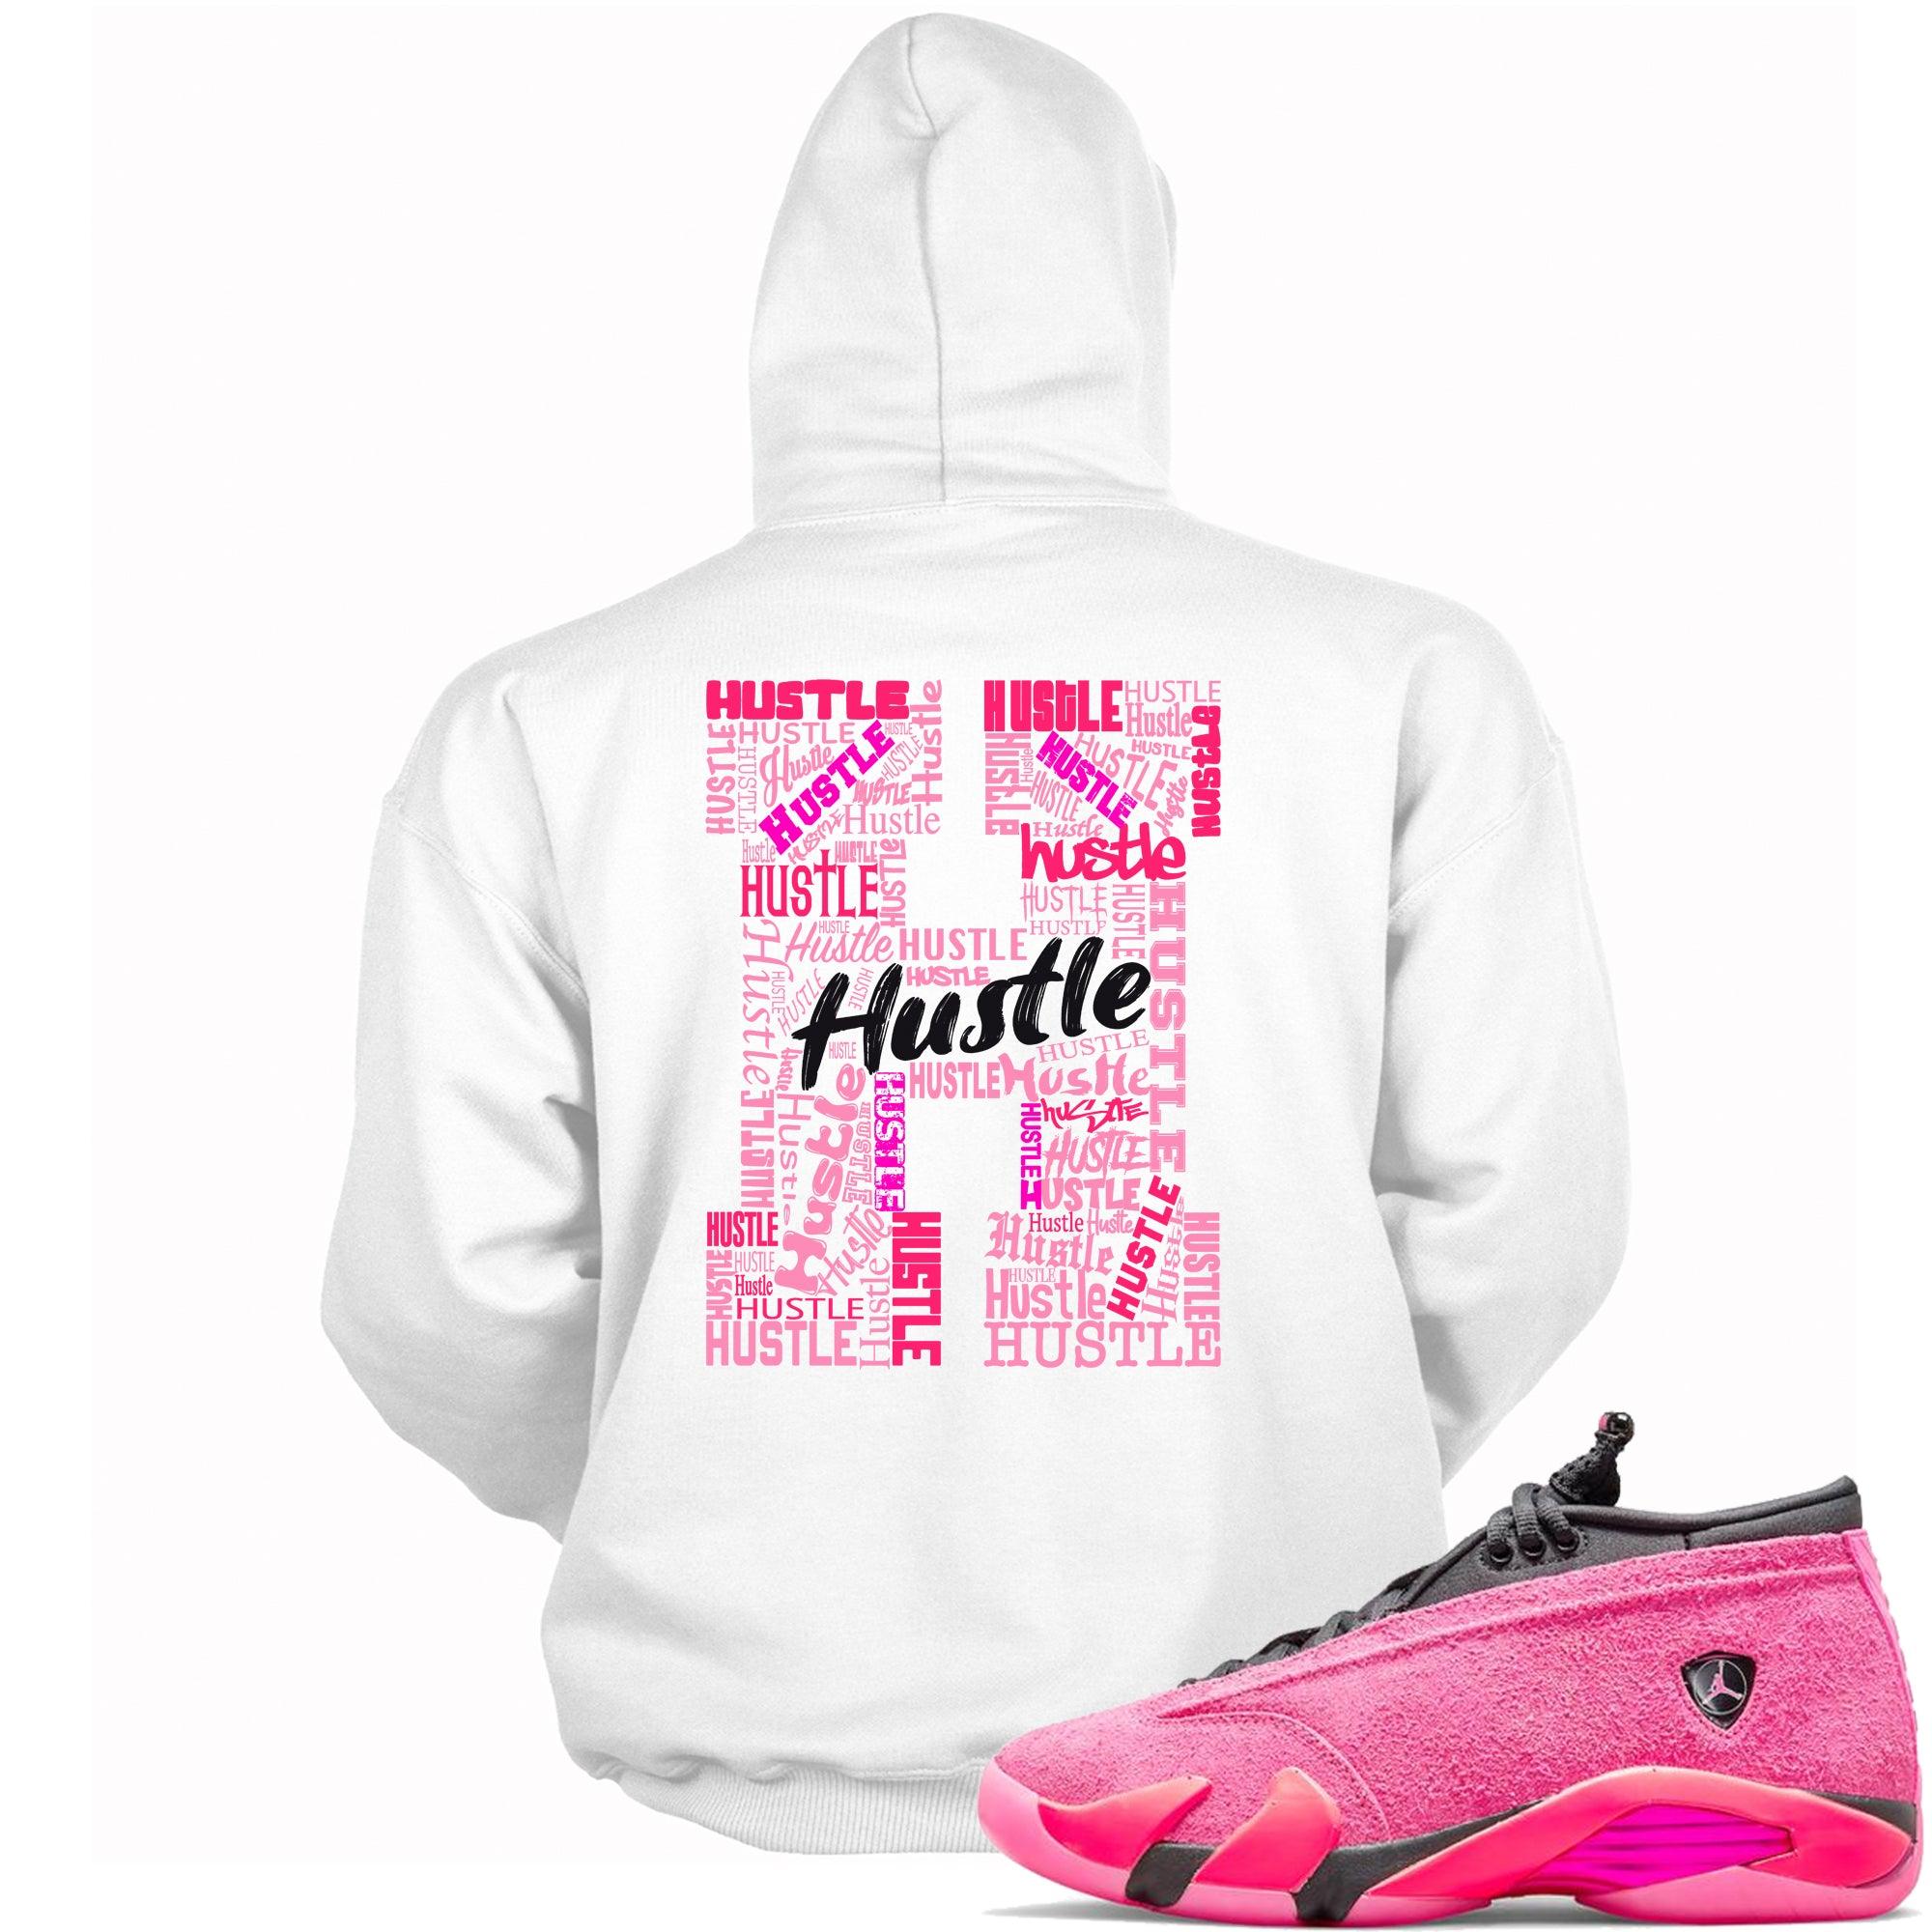 H is for Hustle Hoodie AJ 14 Low Shocking Pink photo